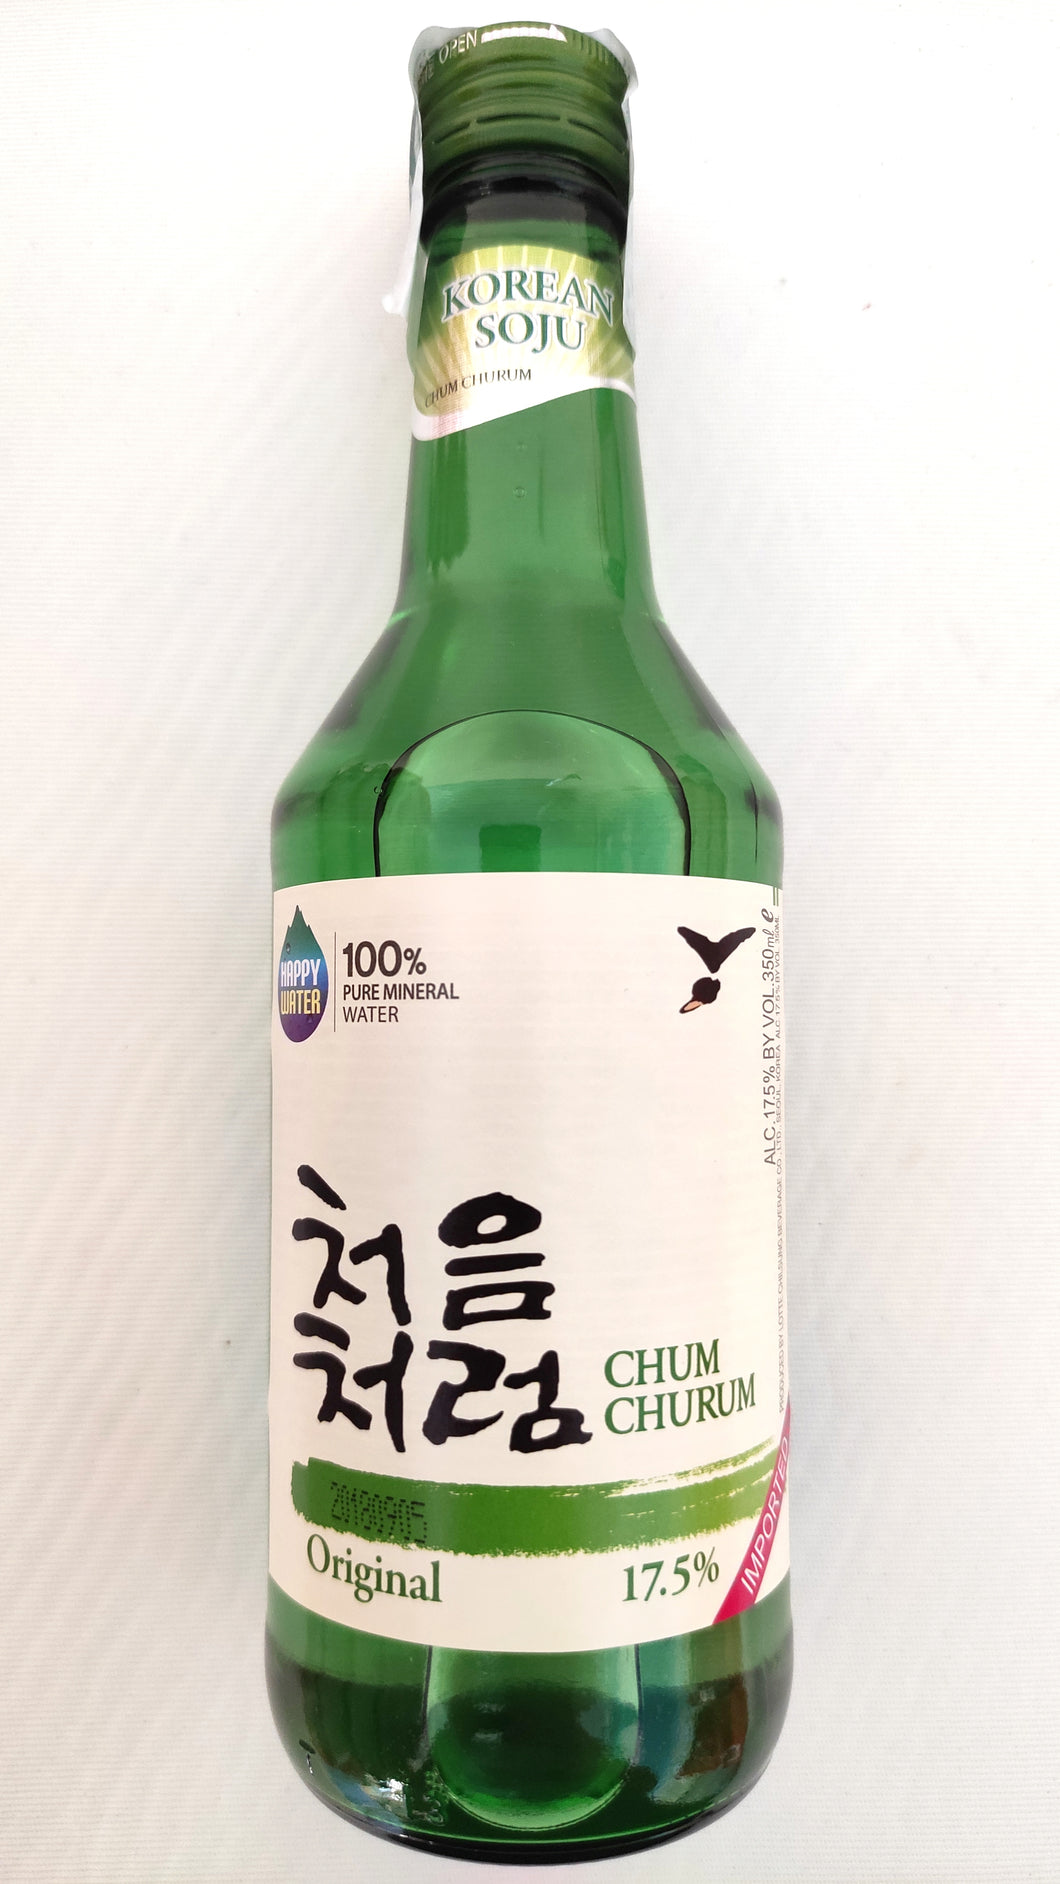 Soju alc. 17.5% chum-churum 360 ml